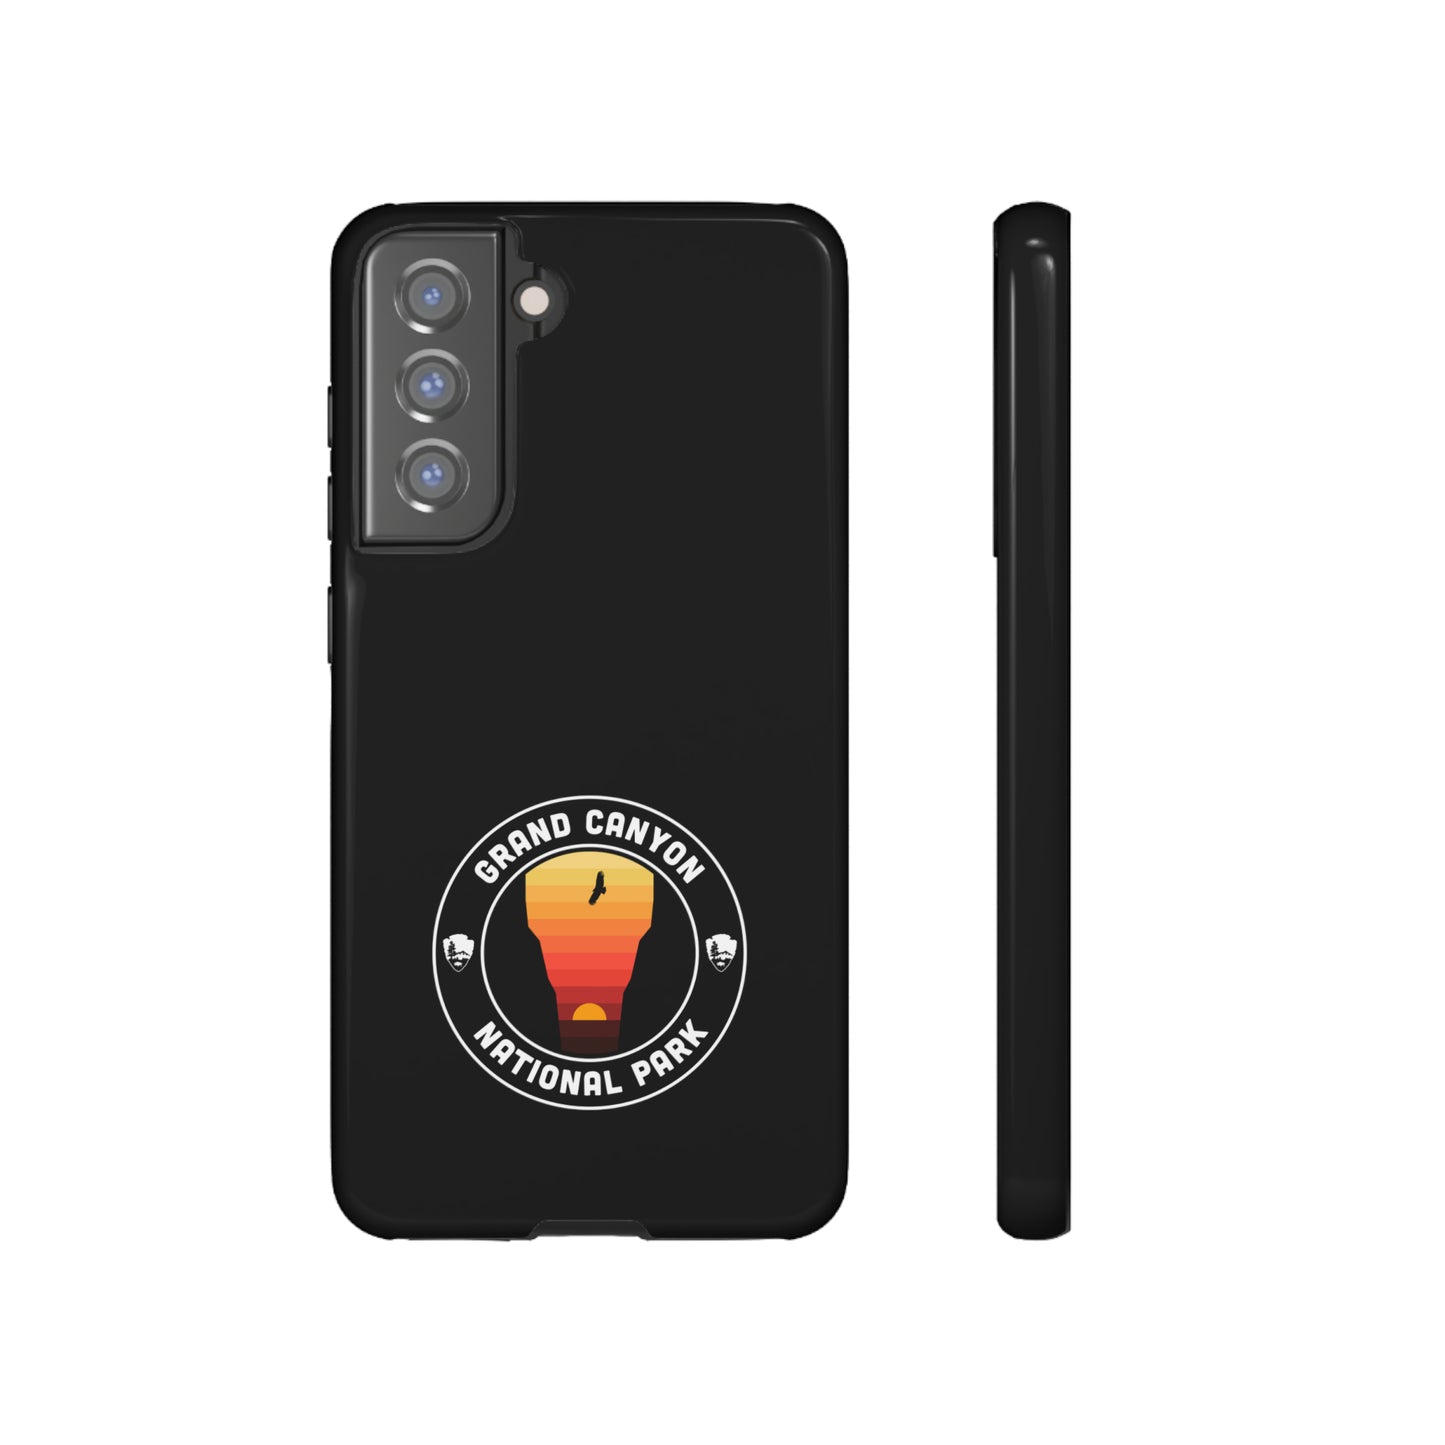 Grand Canyon National Park Phone Case - Round Emblem Design